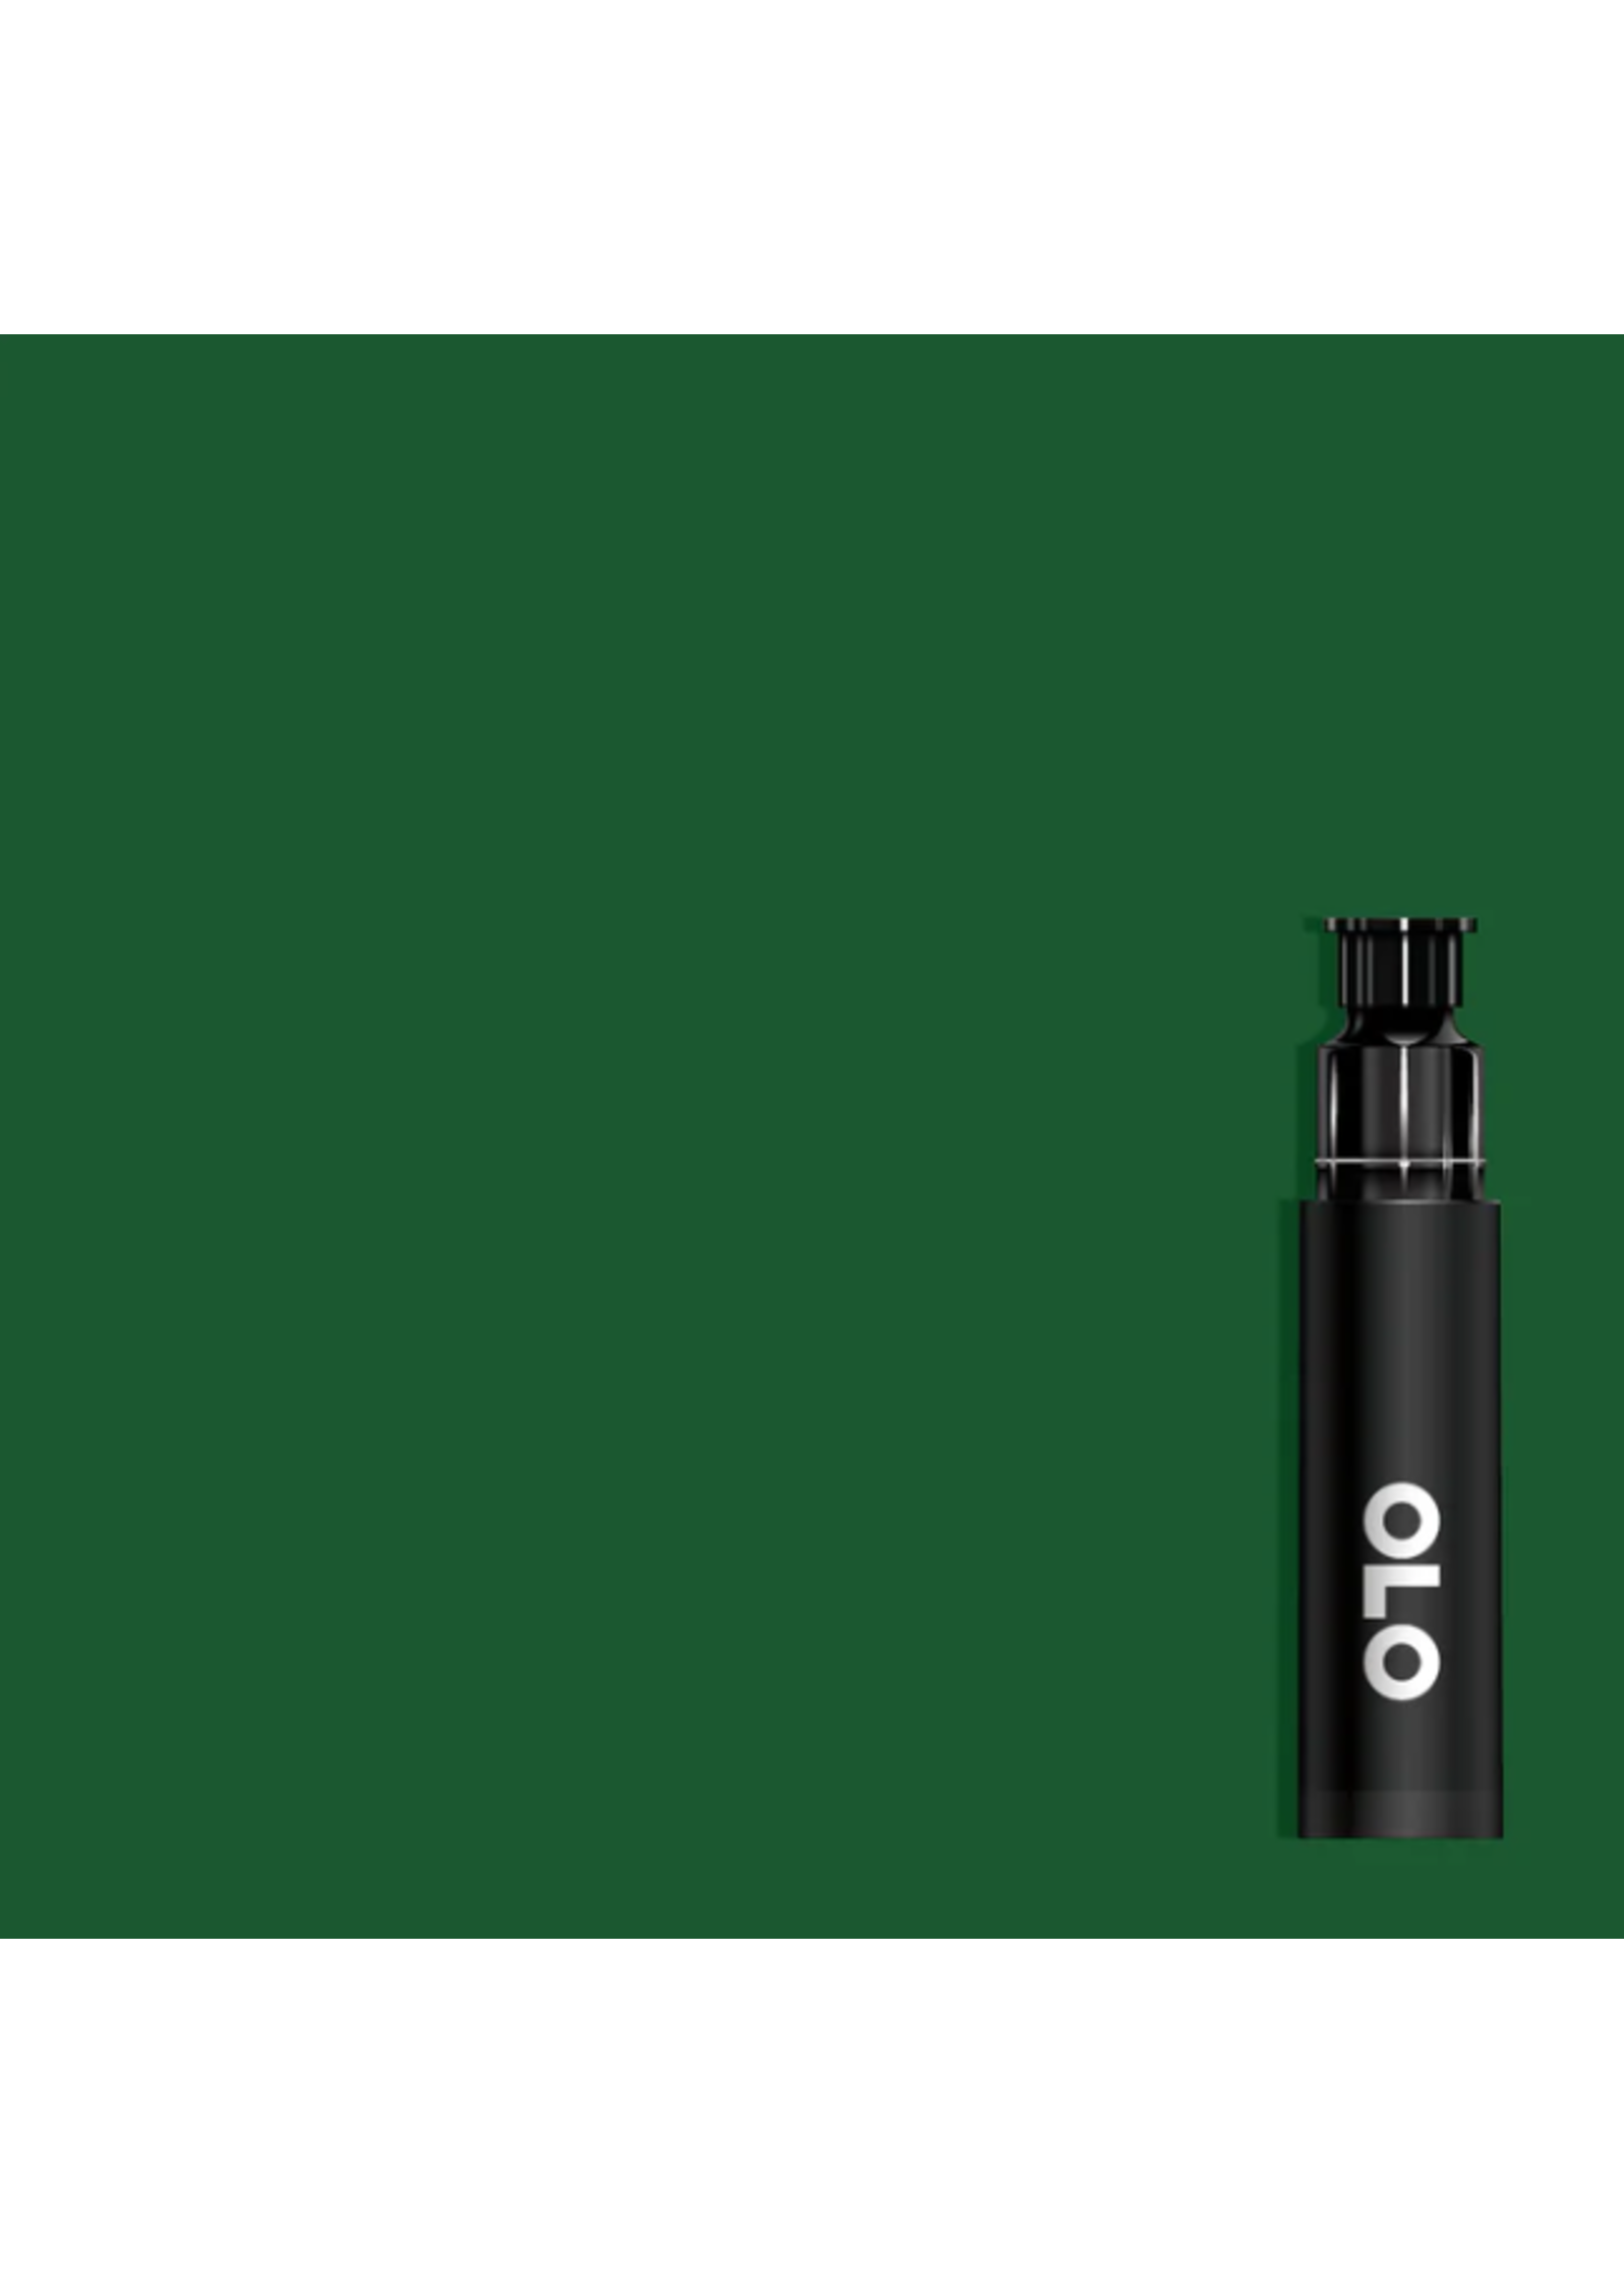 OLO OLO Brush Replacement Cartridge: Evergreen